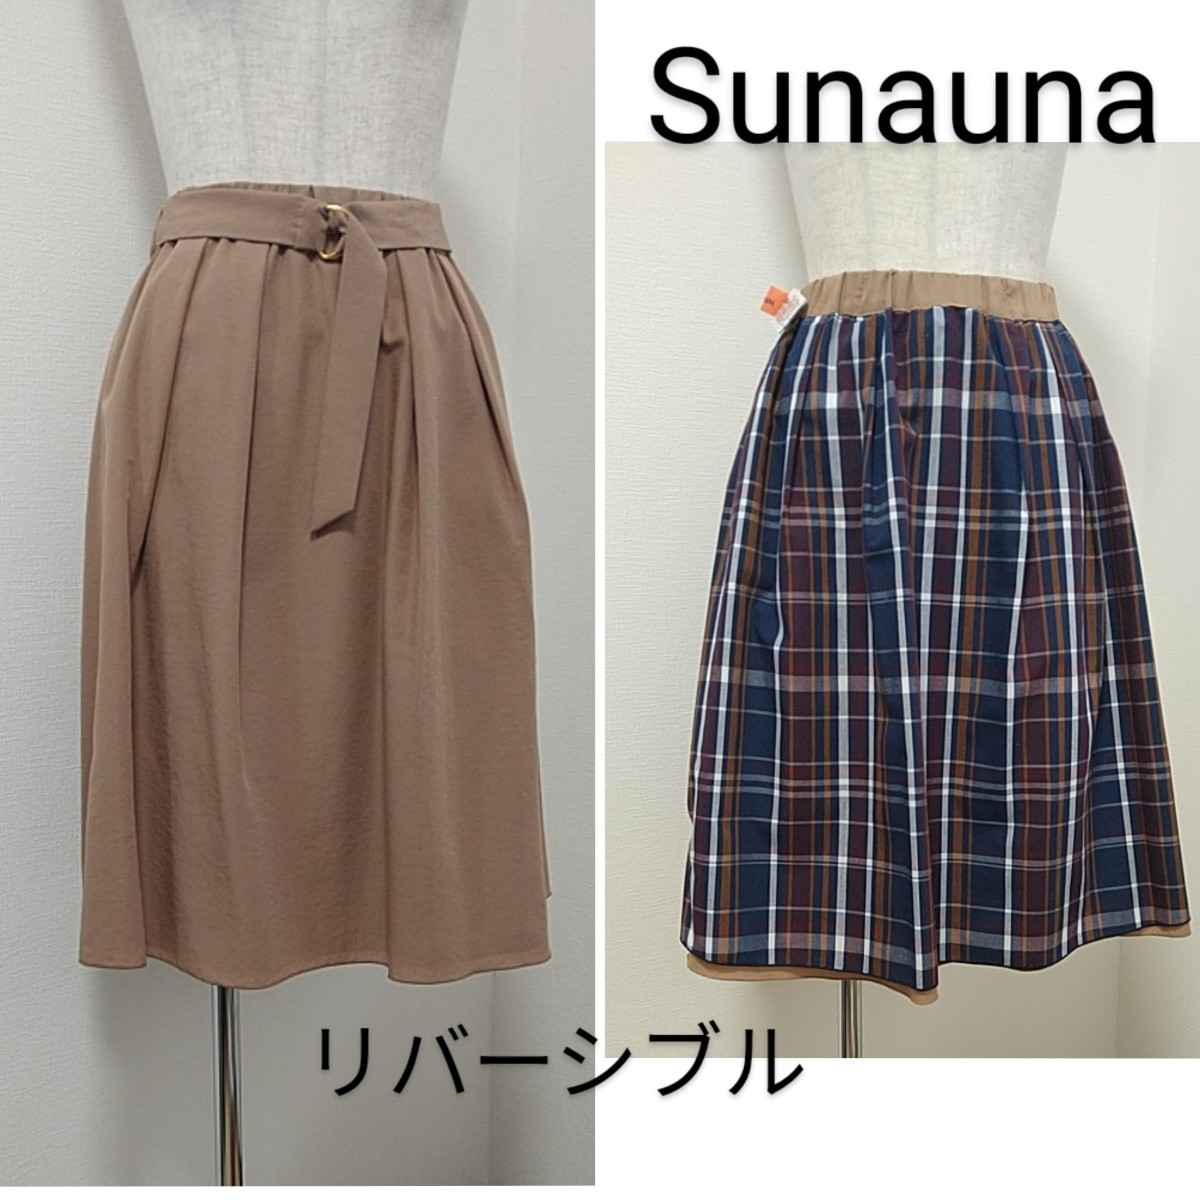 sunauna beige × check skirt 34 reversible SunaUna small size 